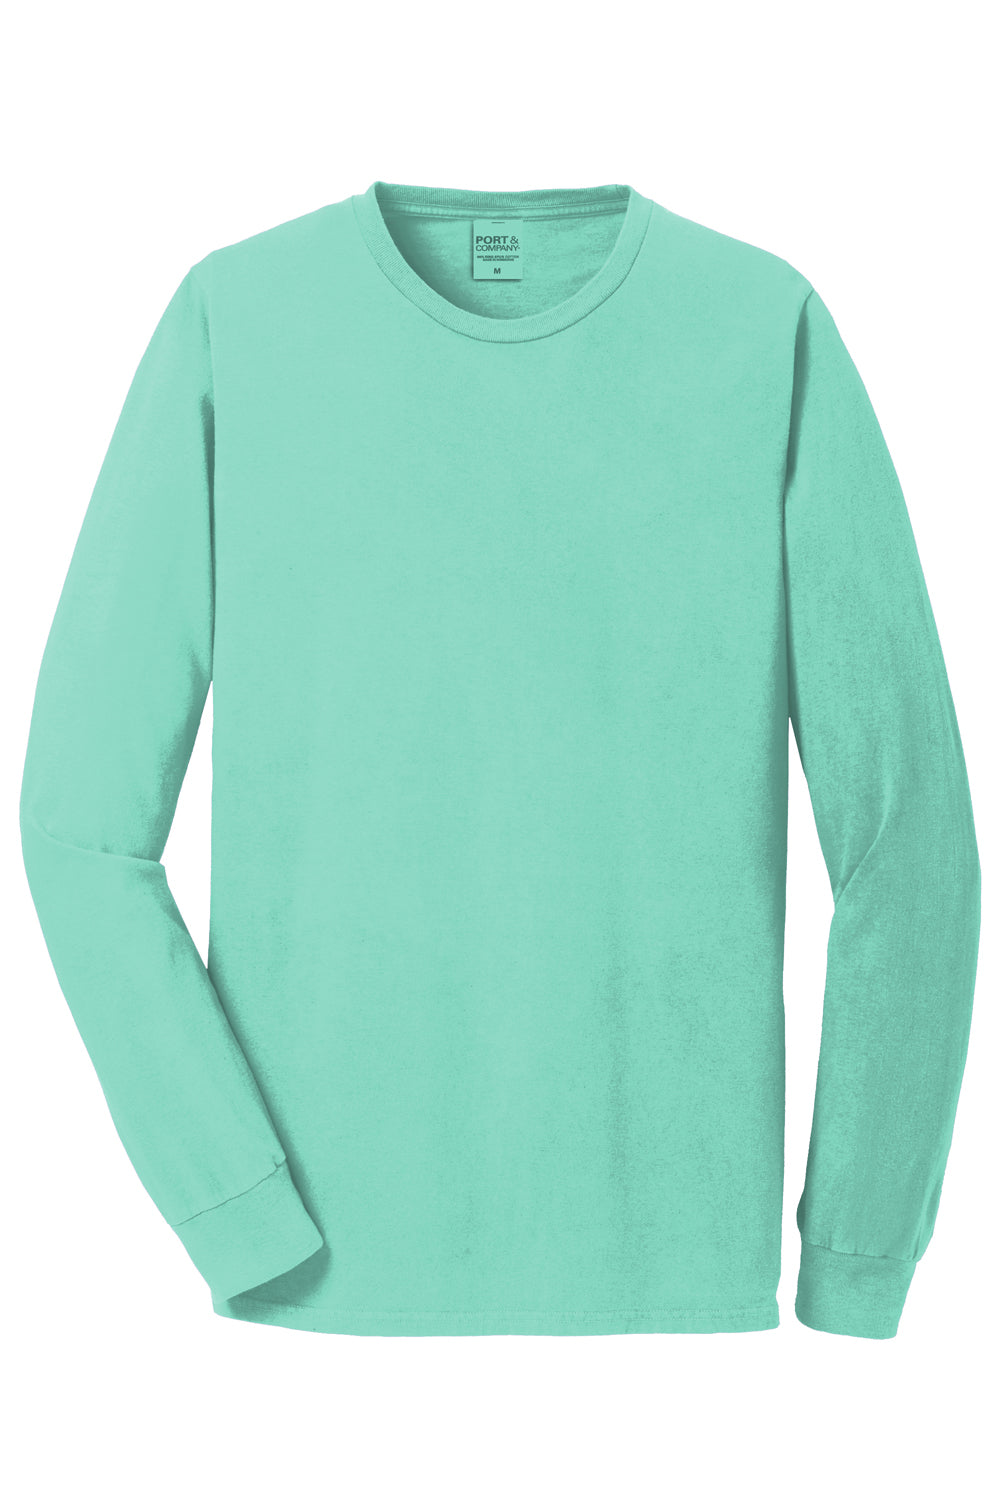 Port & Company Mens Beach Wash Long Sleeve Crewneck T-Shirt Cool Mint Green Flat Front